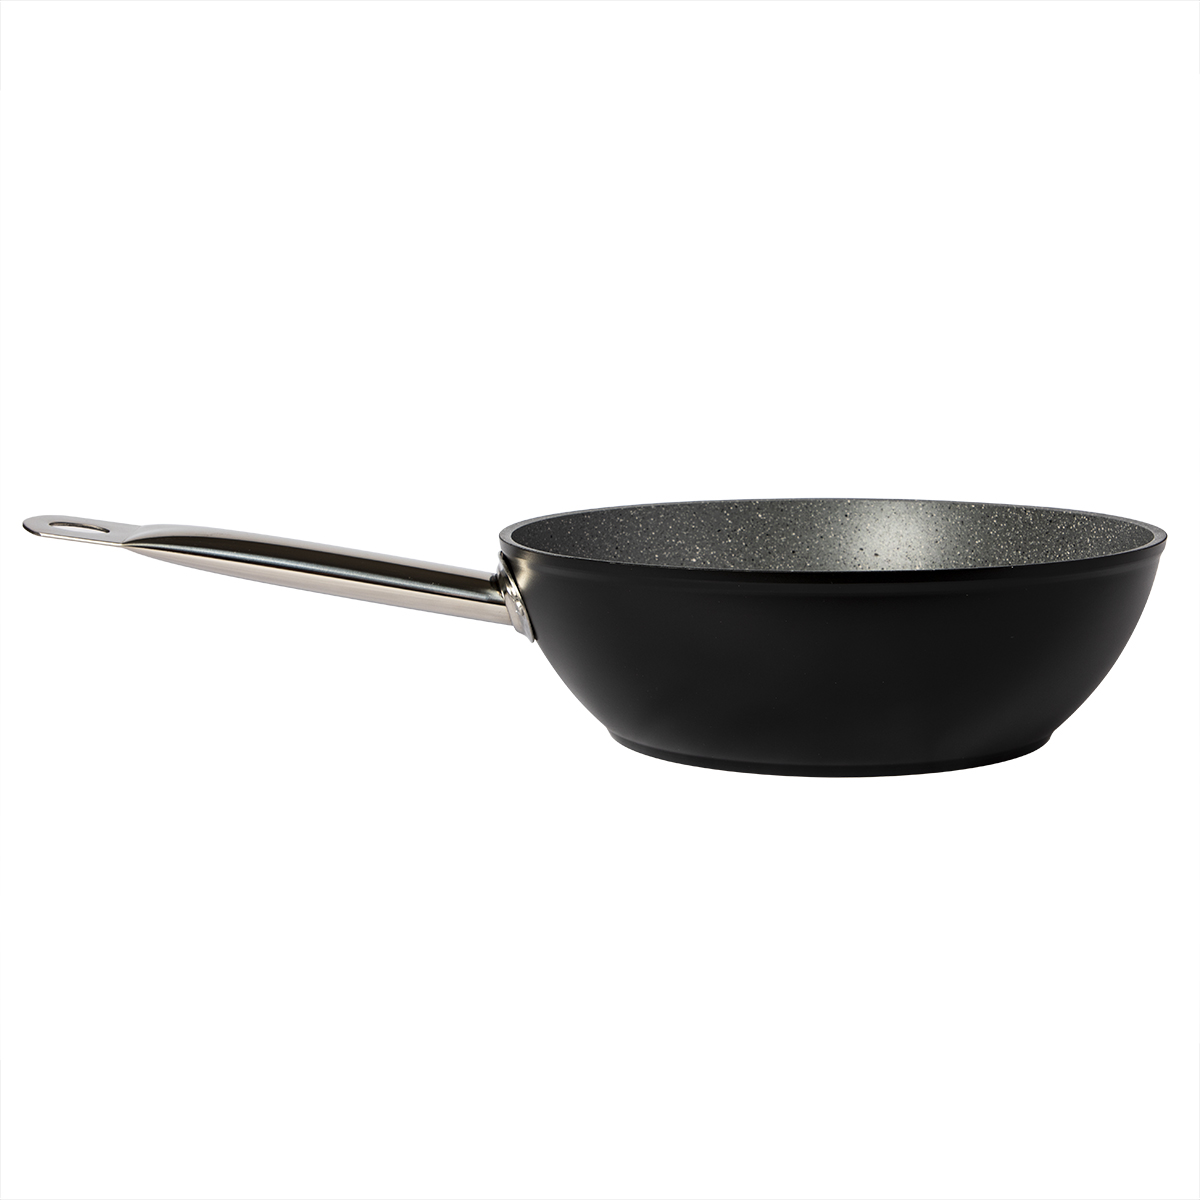 Serenk excellence granite wok pan 28 cm